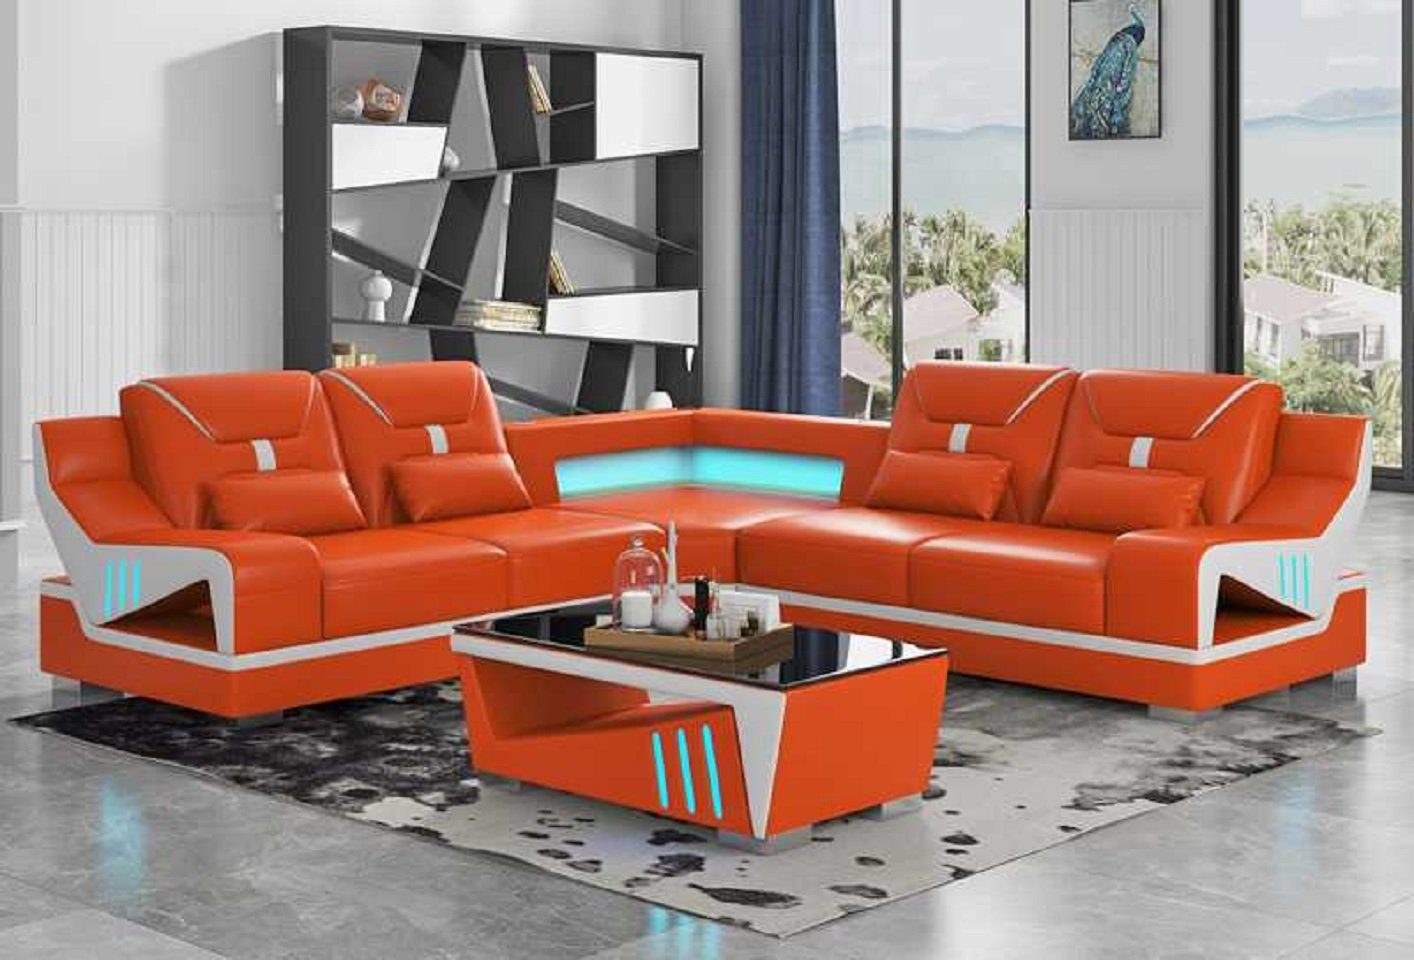 3 in Orange Couch Teile, Eck L Ecksofa Ecksofa Modern Europe JVmoebel Made Sofa Form Polster Designersofa Couchen,